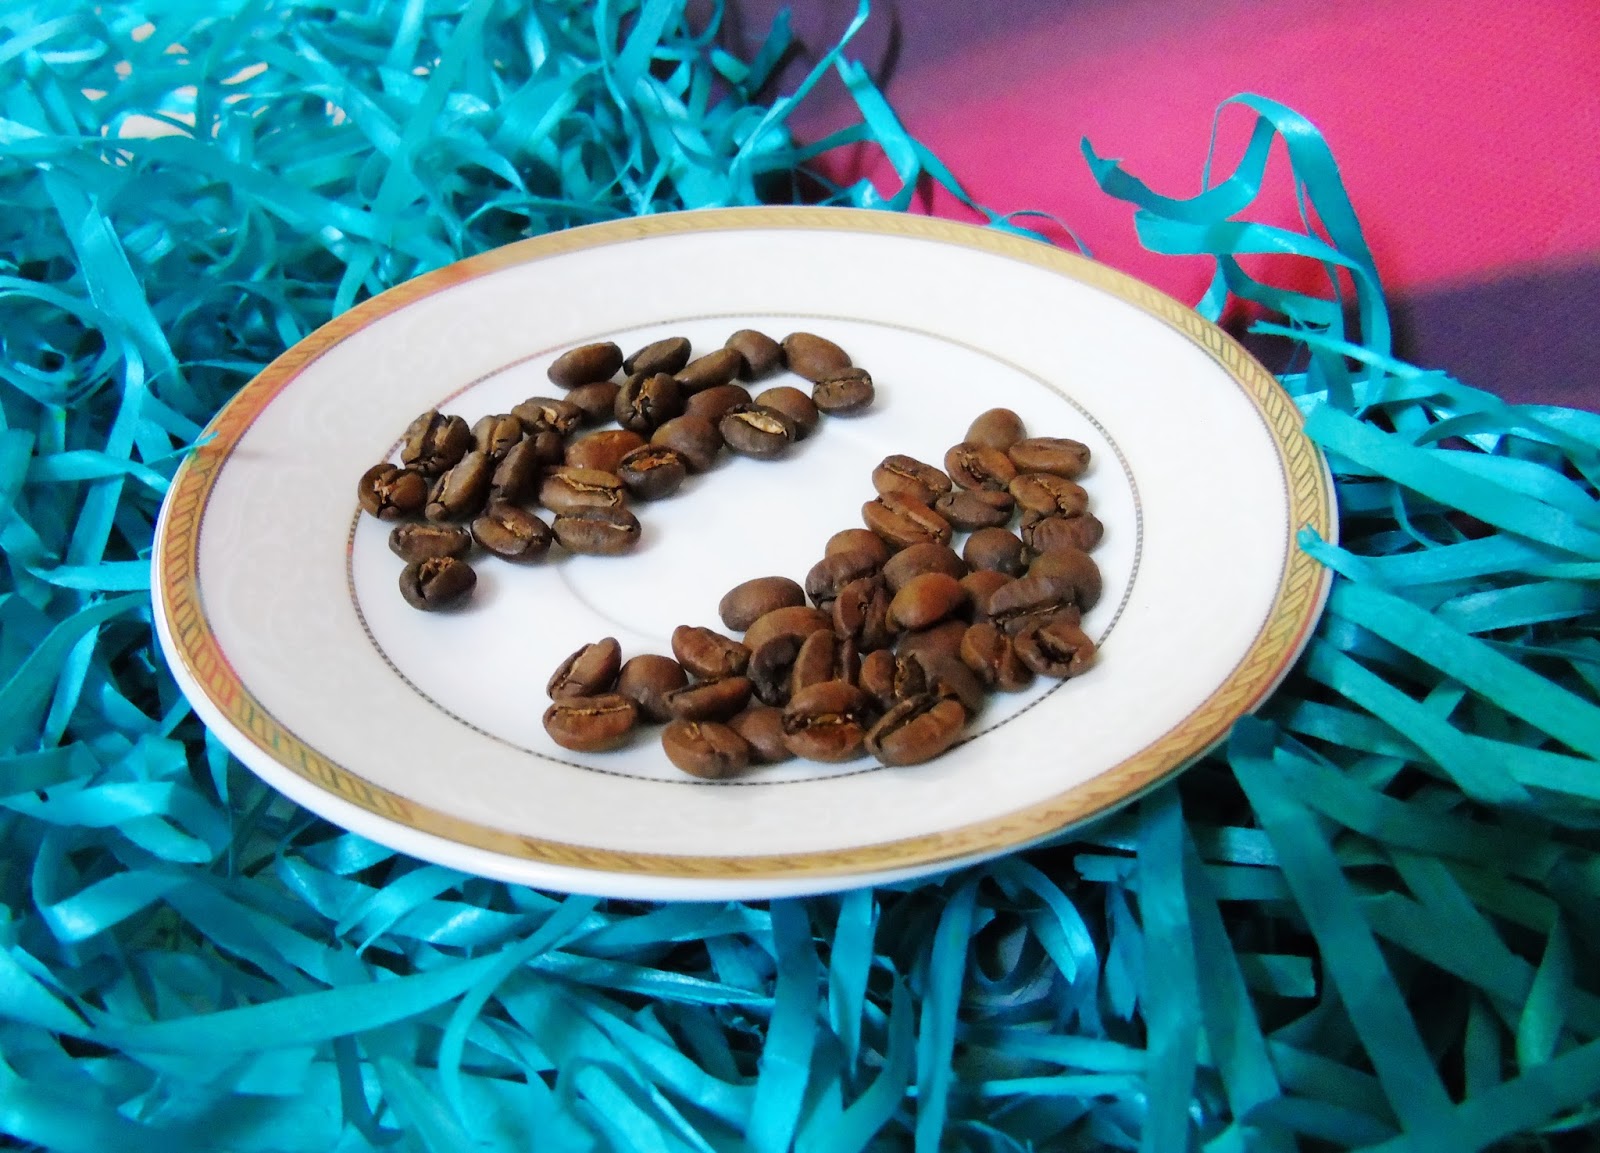 Blog testerski: MANU CAFE & MANU TEA - zaskakujÄce poÅÄczenia aromatyczno - smakowe, w ktÃ³rych siÄ zakochacie!